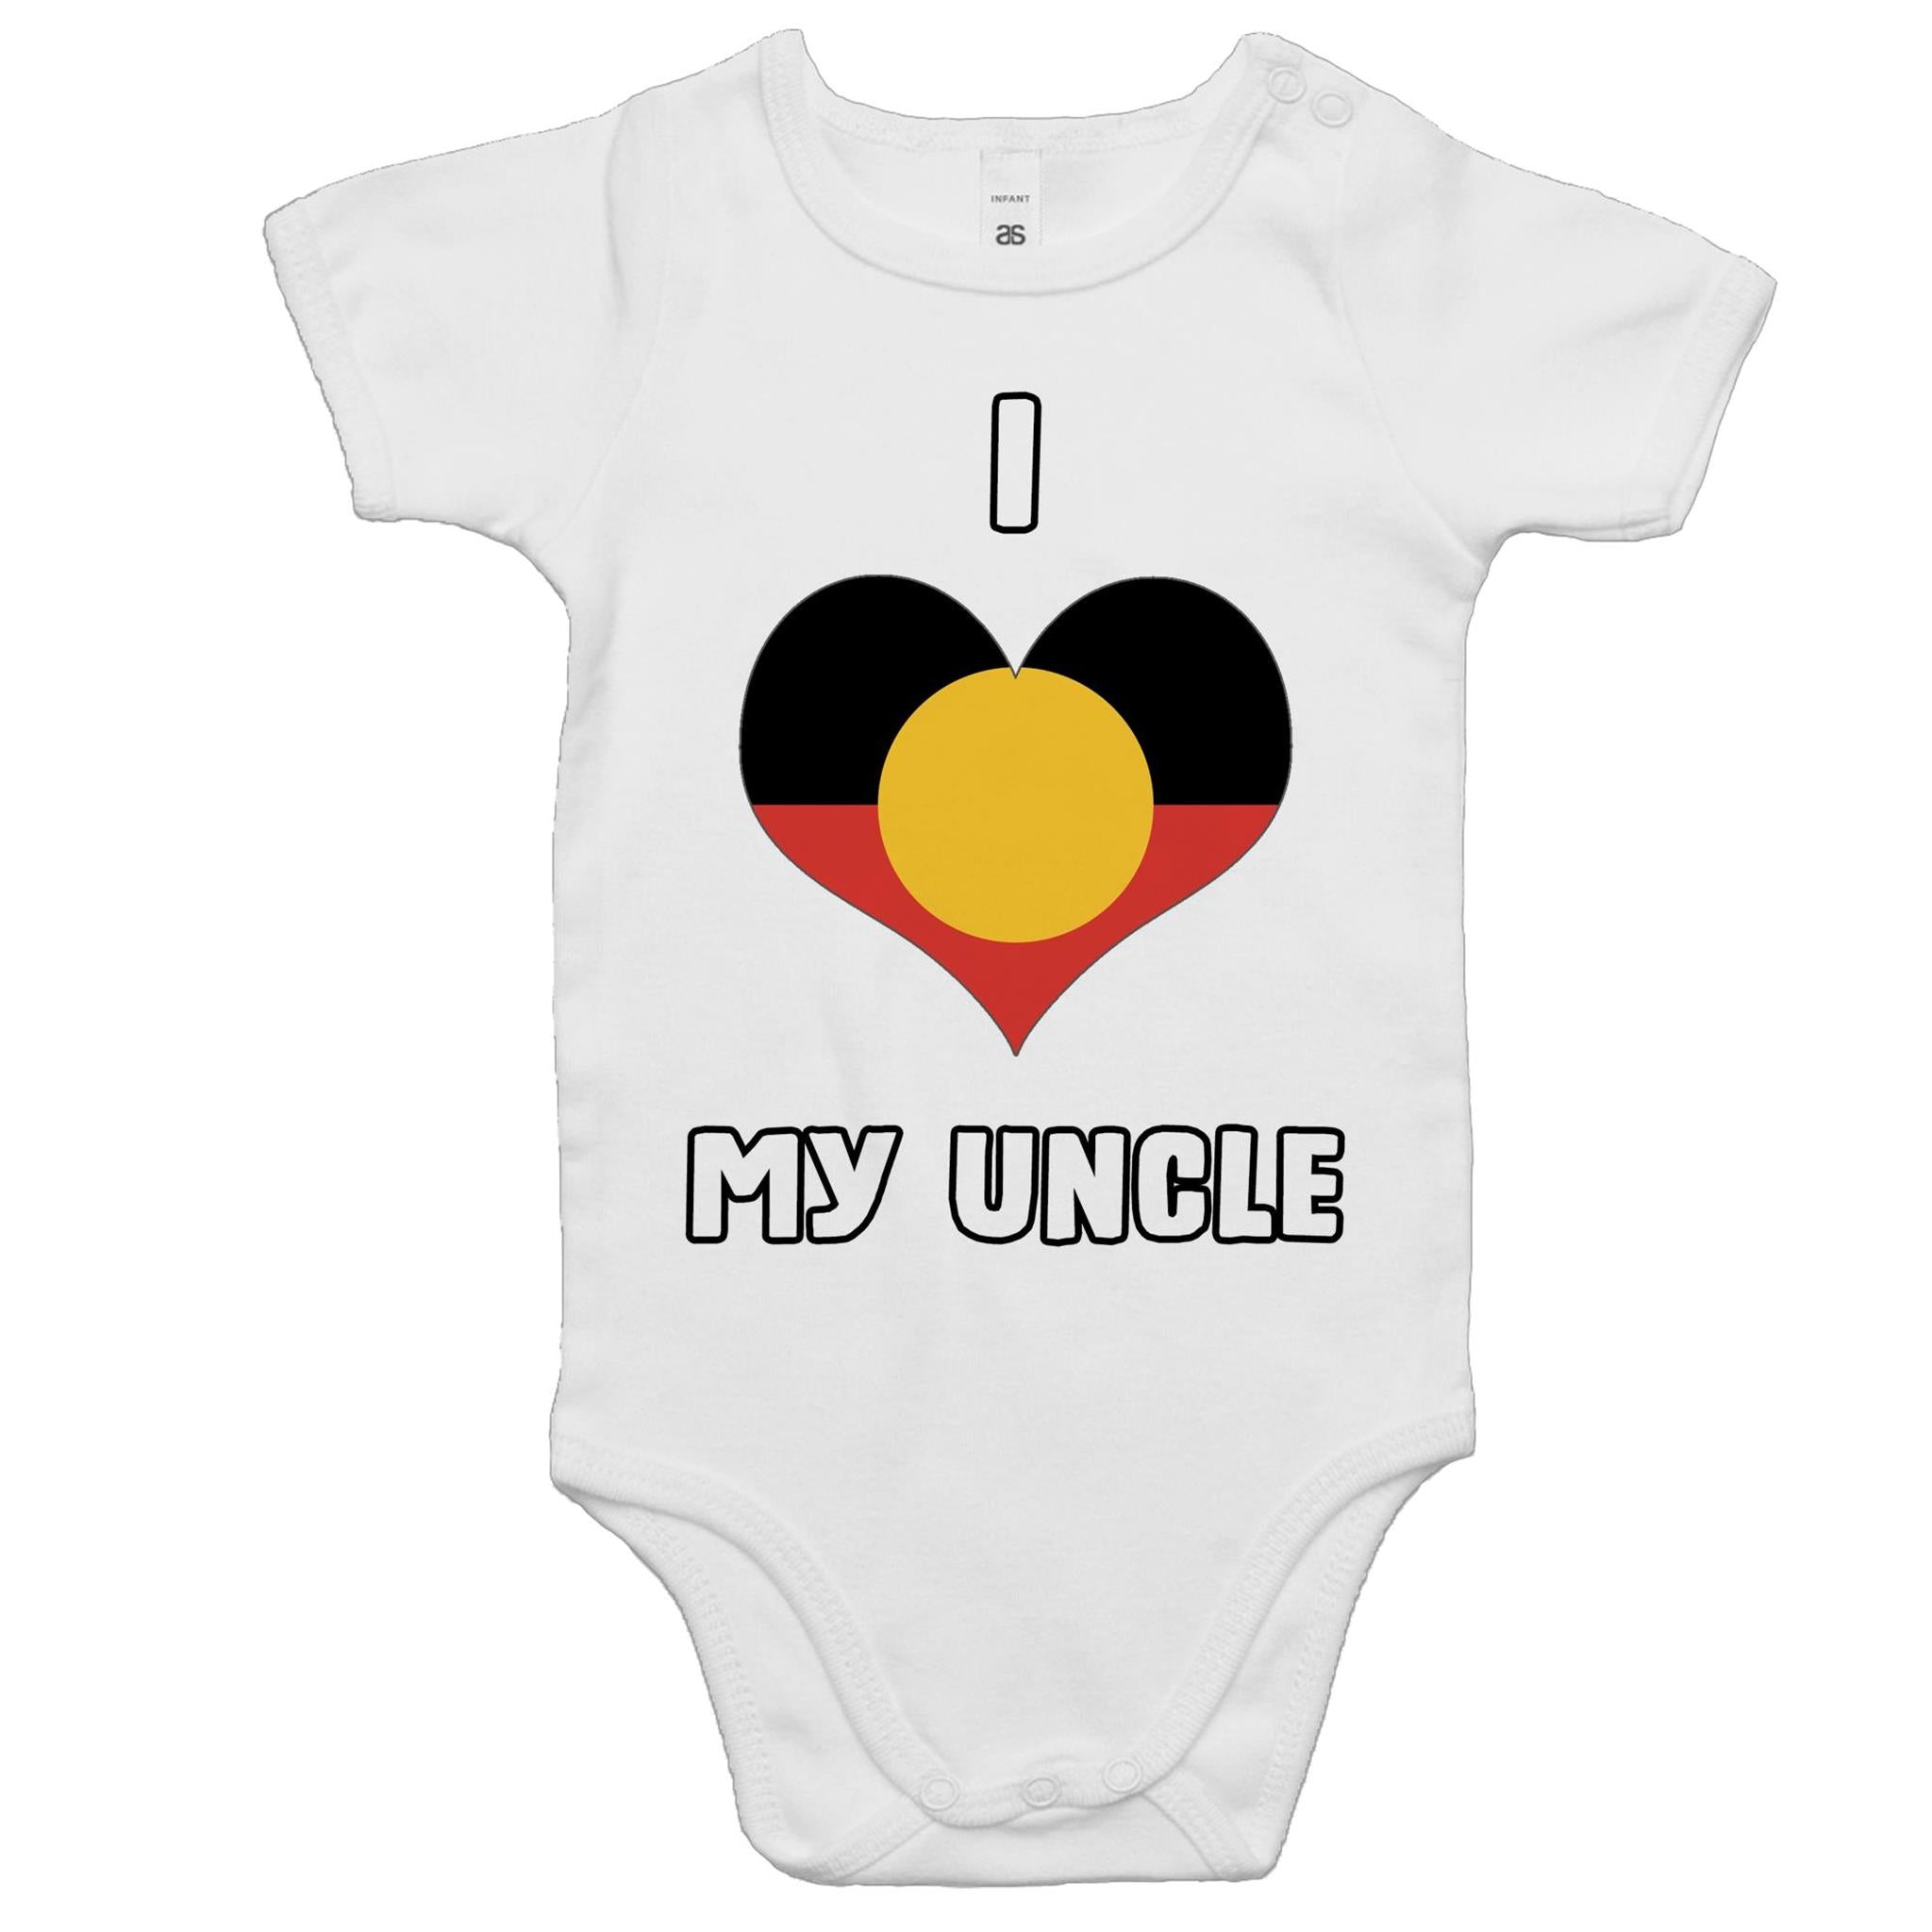 'I Love My Uncle' Romper - White